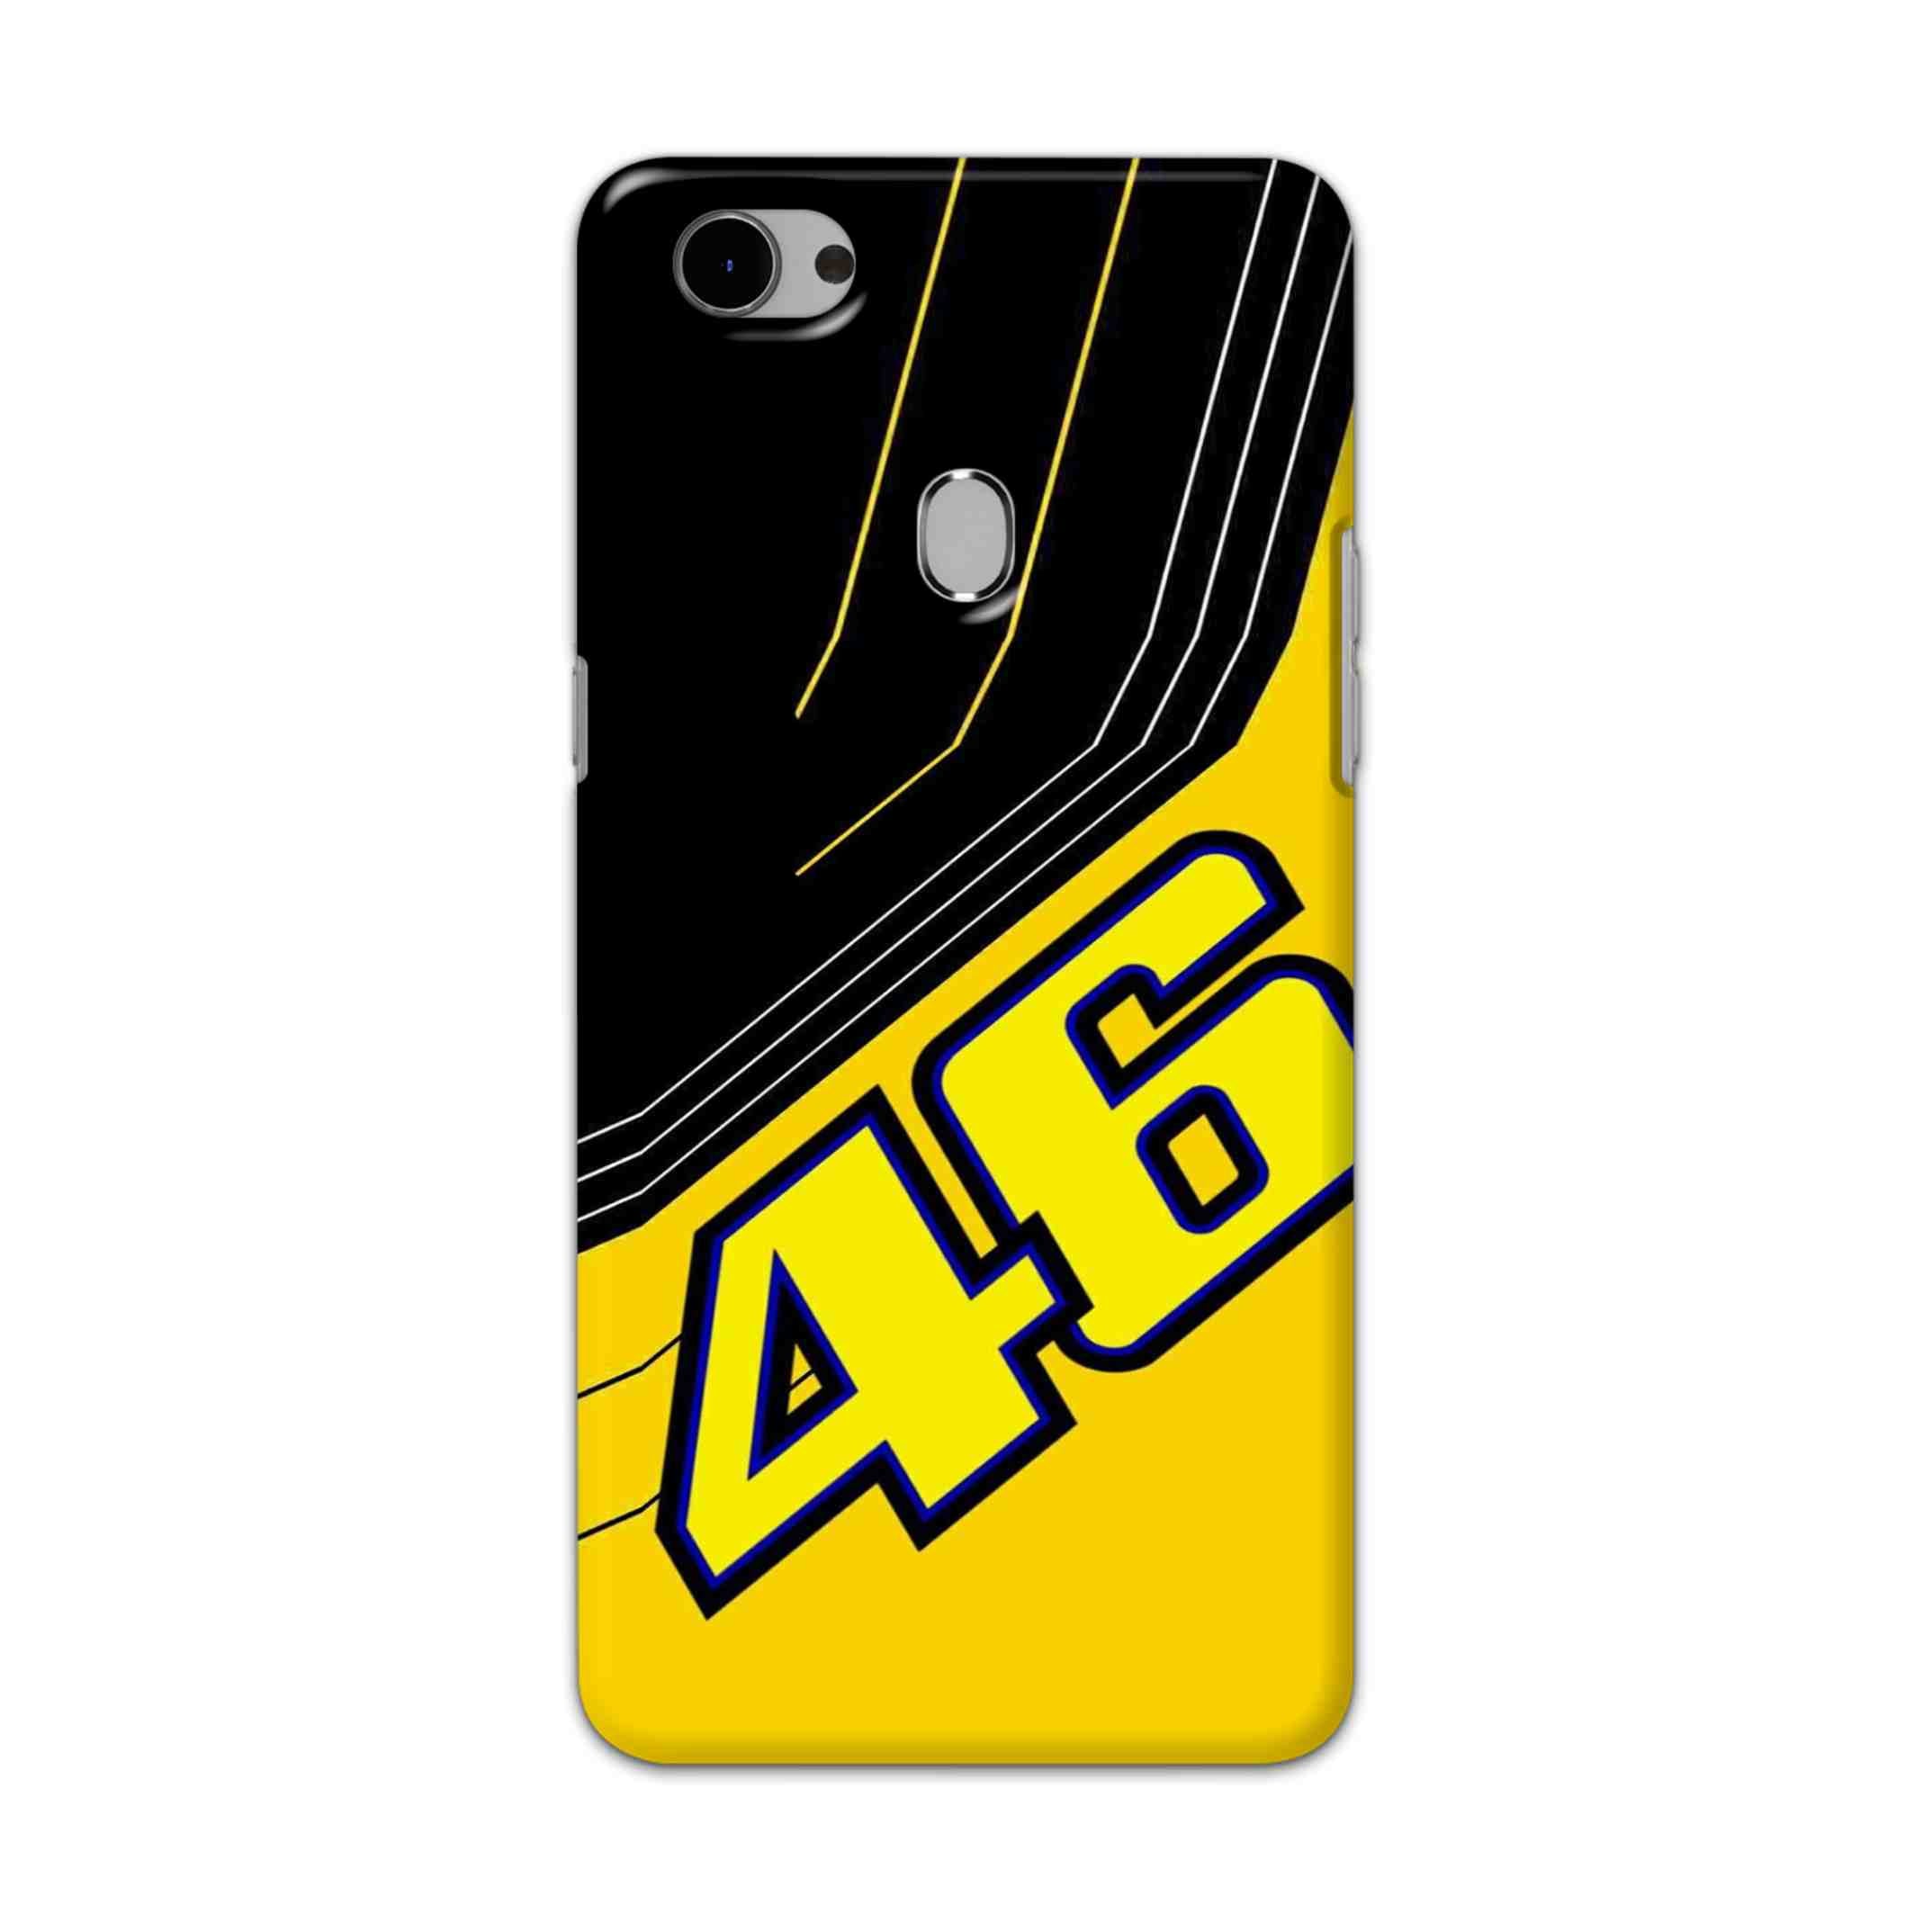 Buy 46 Hard Back Mobile Phone Case Cover For Oppo F7 Online